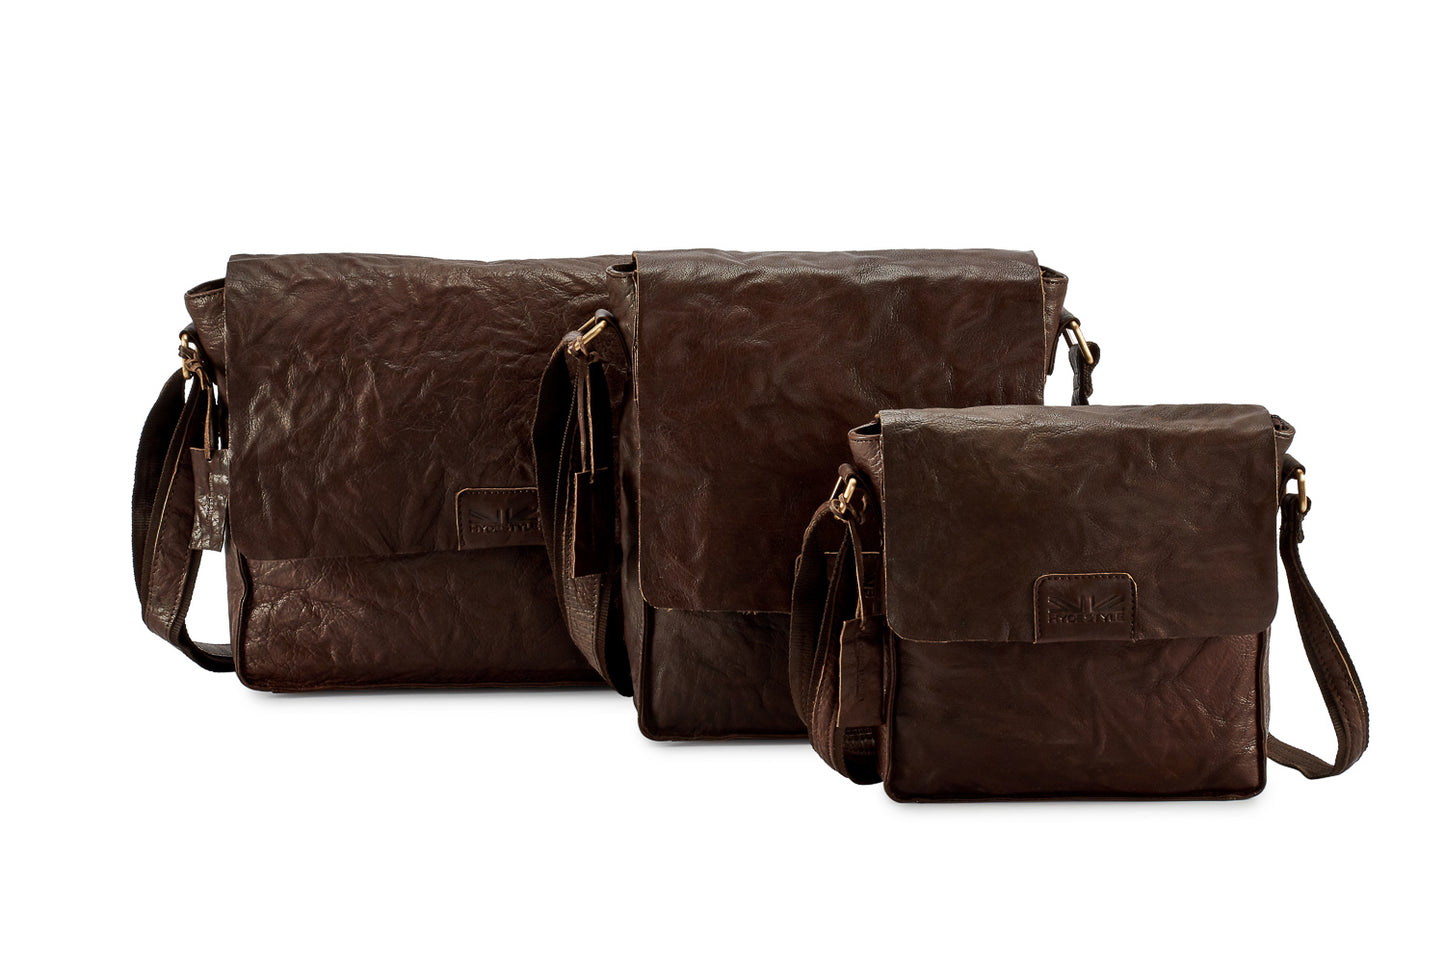 Pello Black washed leather man-bag #UM101 - Small